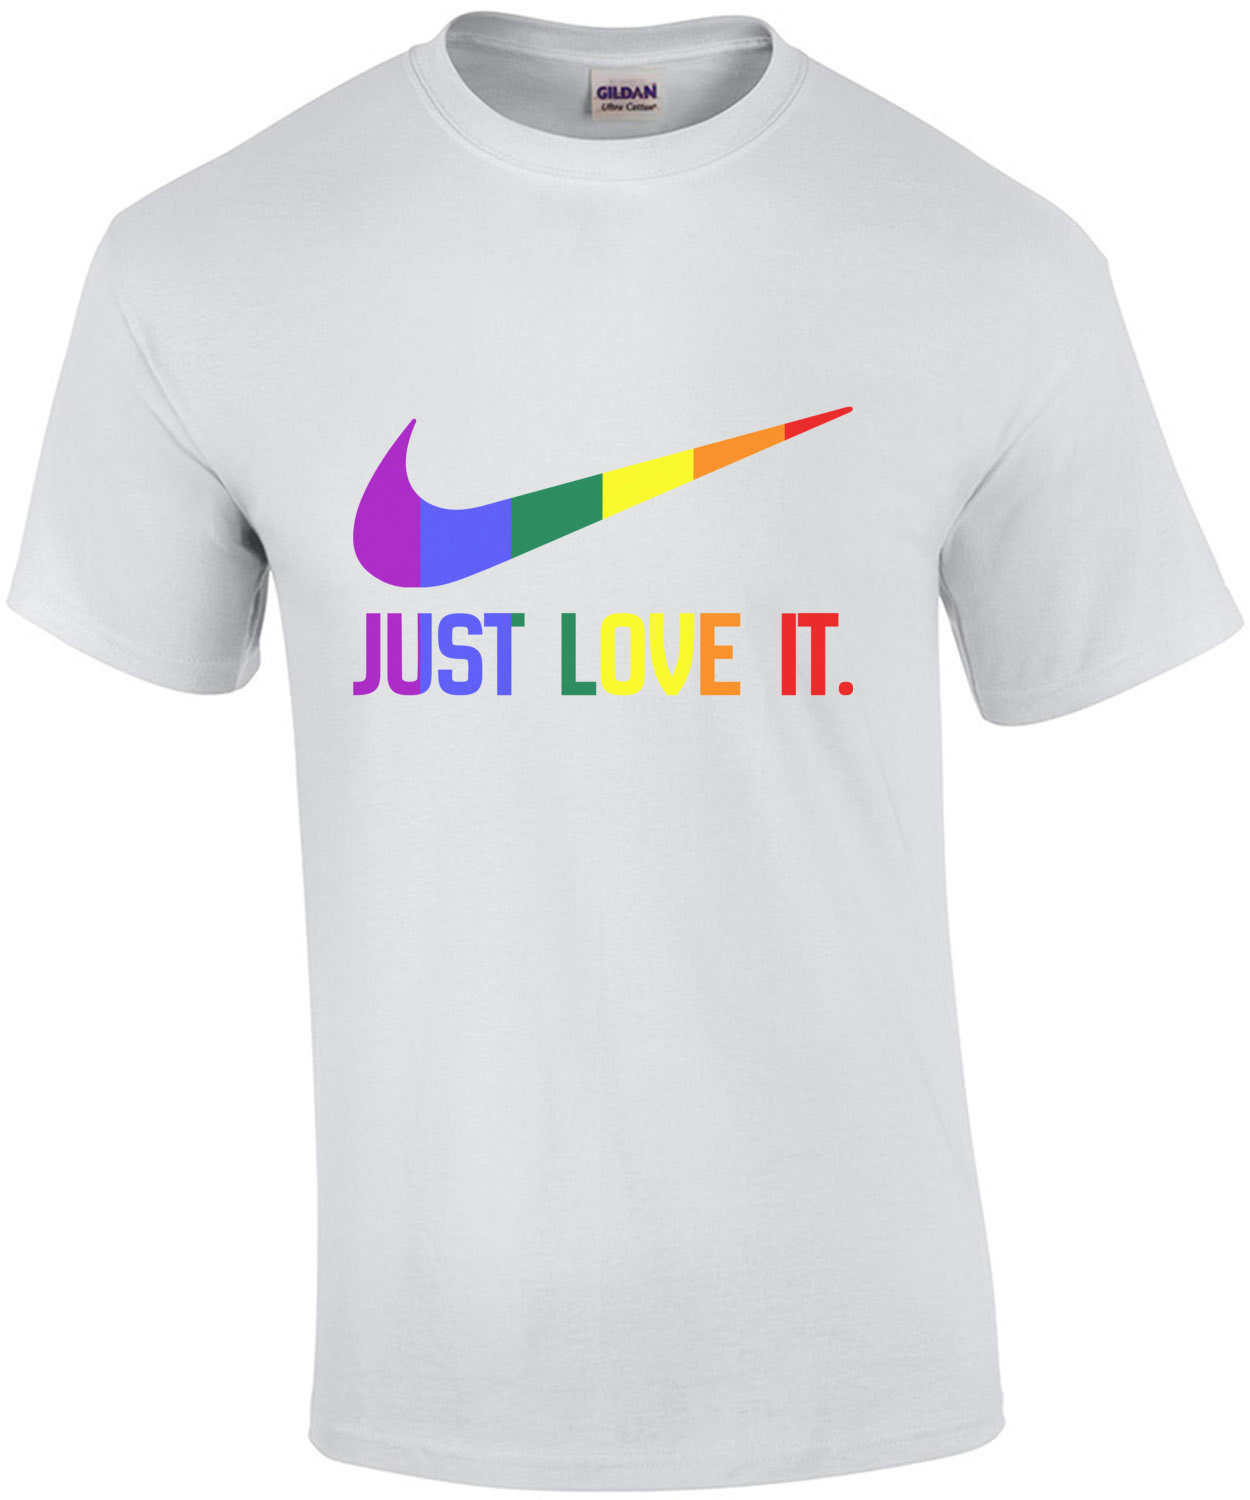 Just love it - Gay Pride T-Shirt